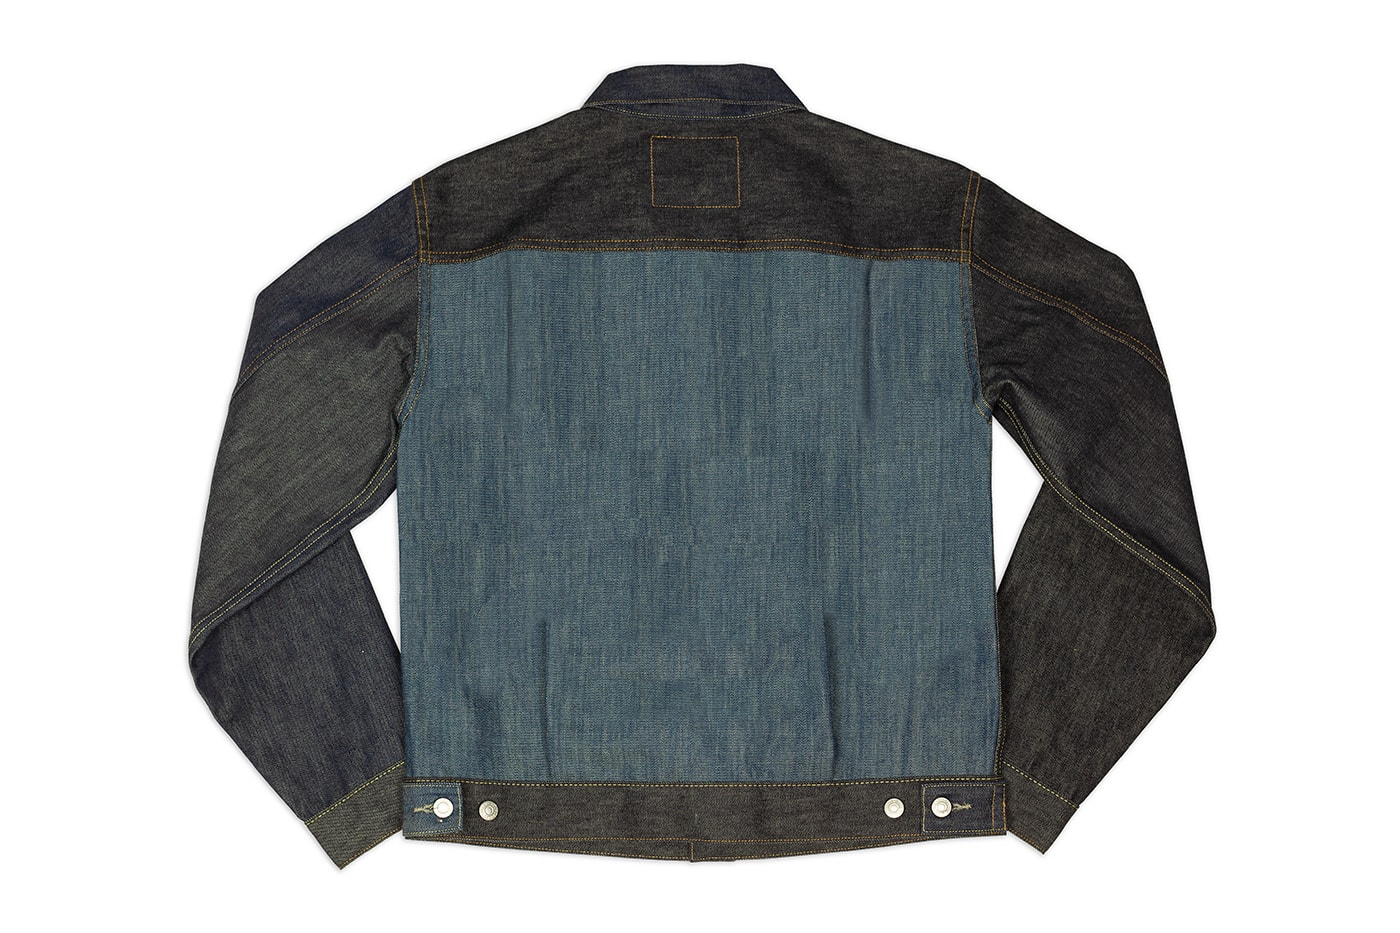 Levis Vintage Clothing Cone Mills White Oak Collection levi jeans denim jacket selvedge trucker farewell partnership fabric north carolina